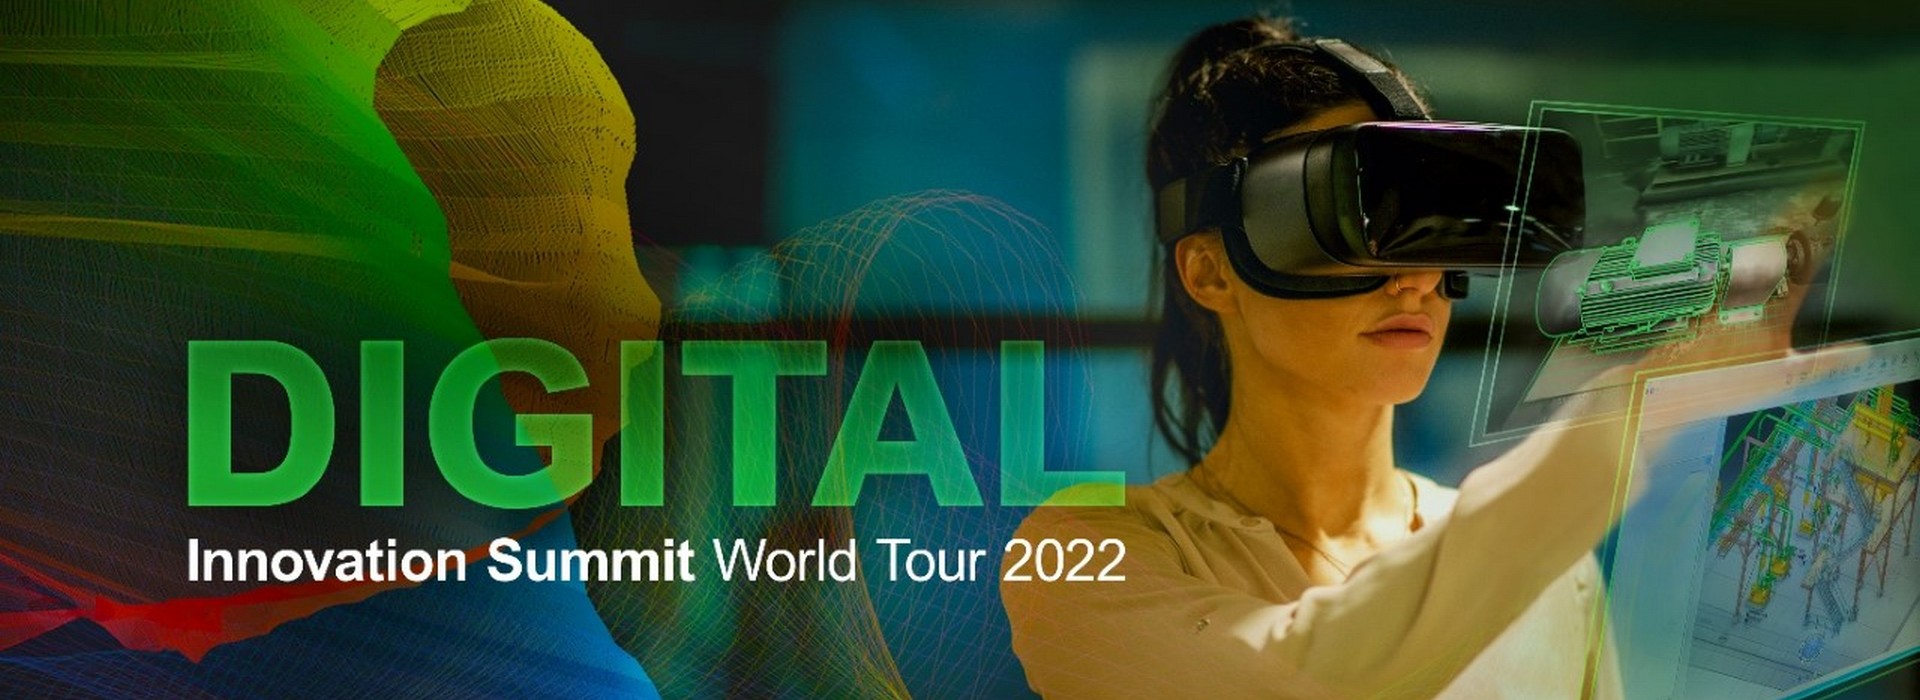 Schneider Electric розпочали Innovation Summit World Tour 2022